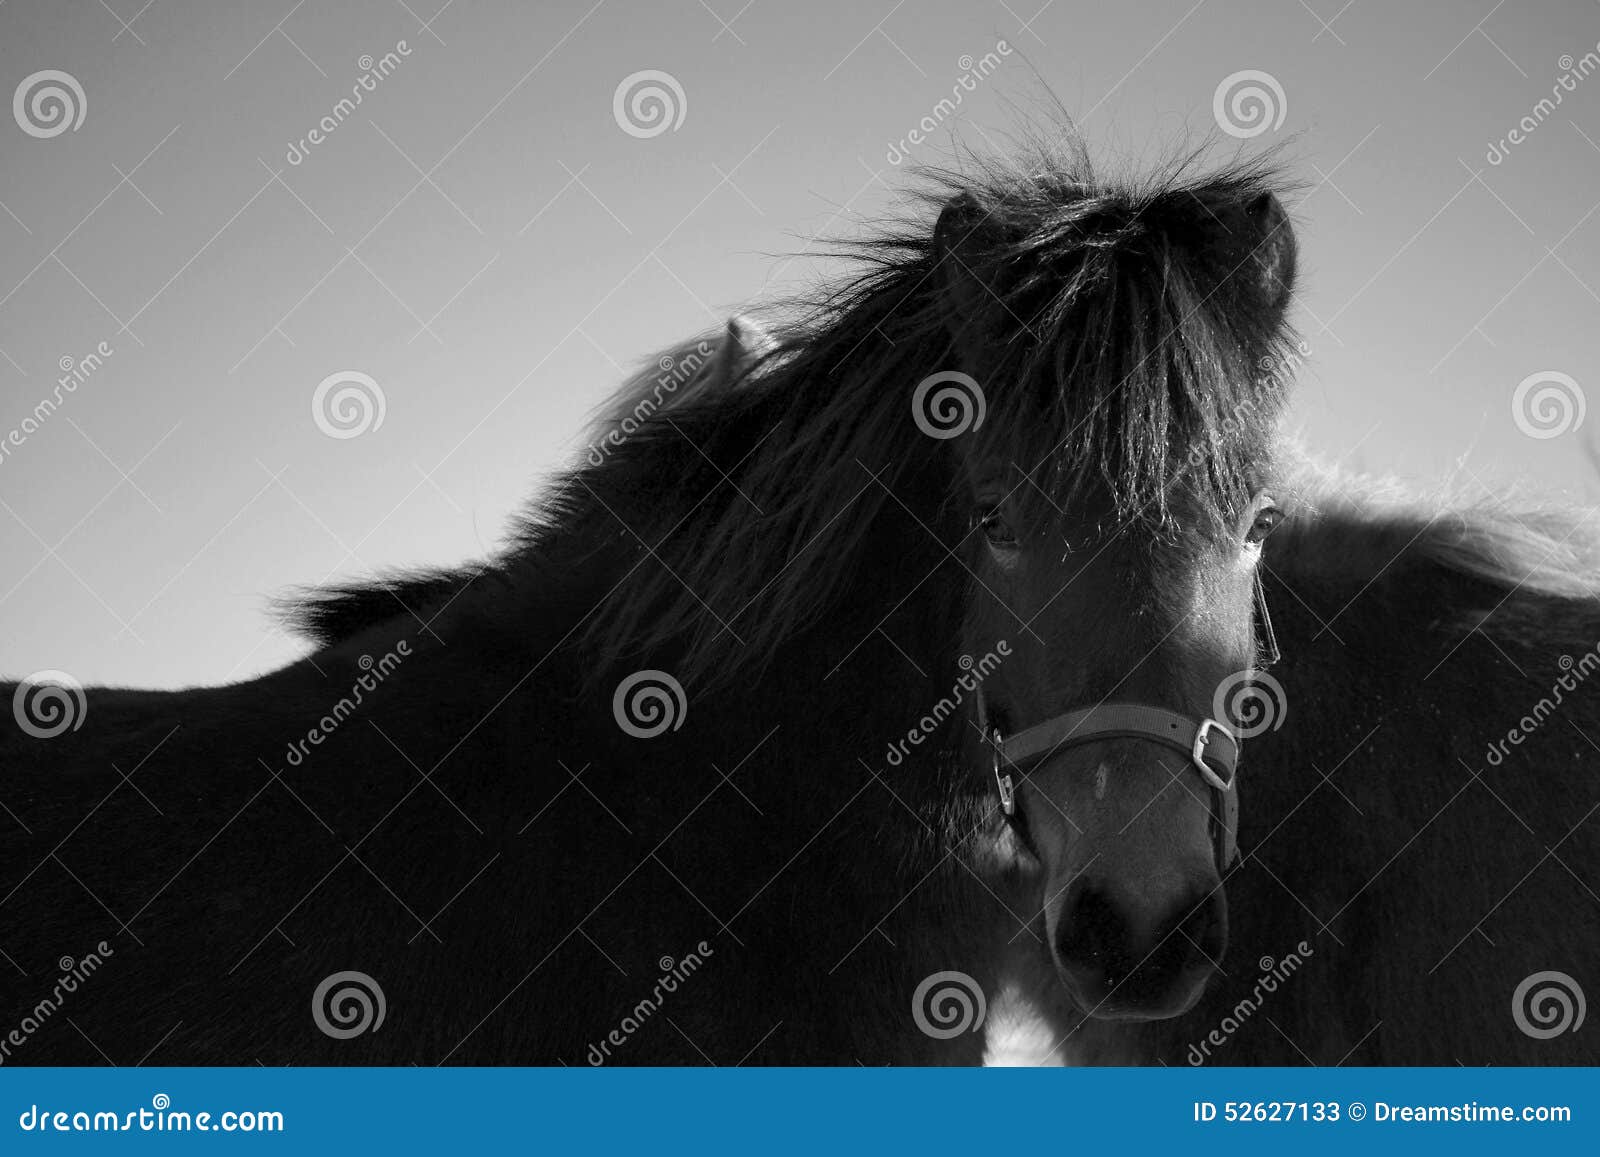 icelandic horse